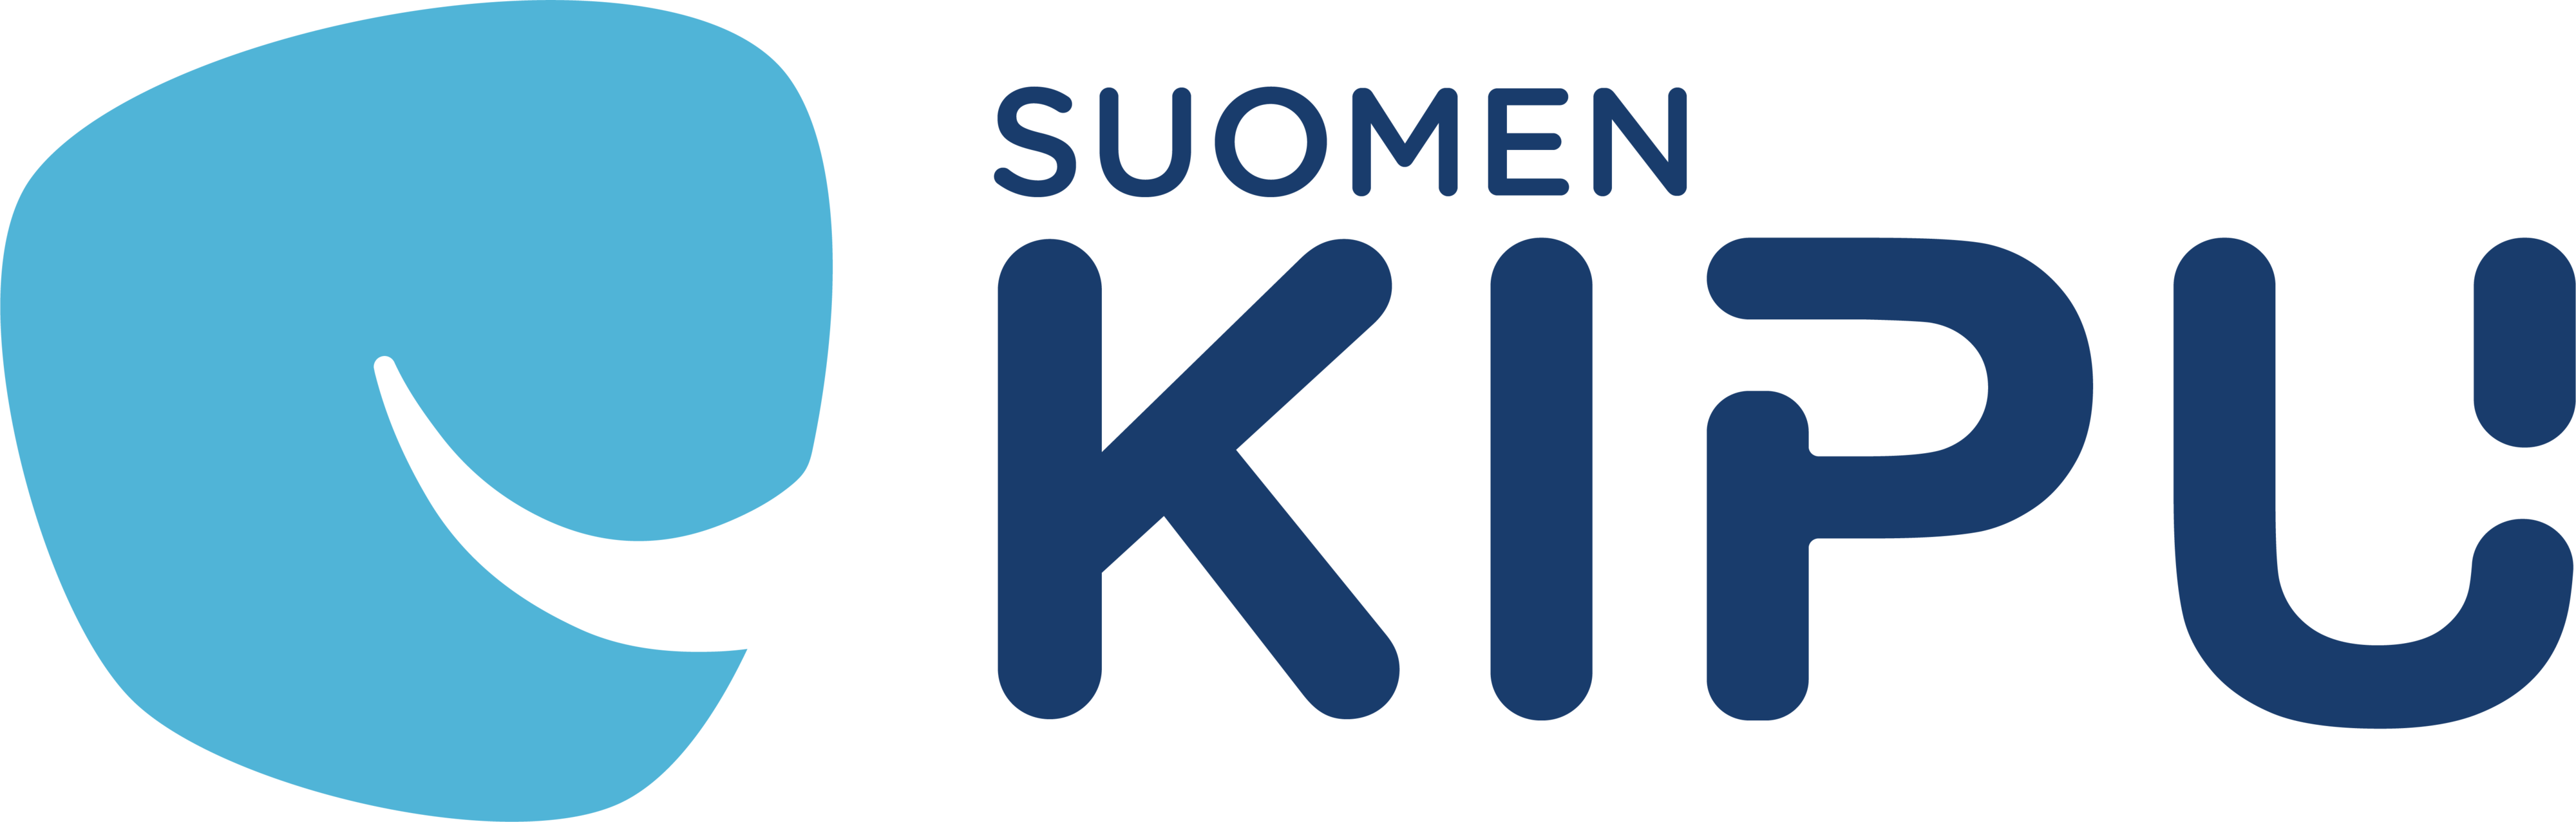 Suomen Kipu ry:n uusi logo.